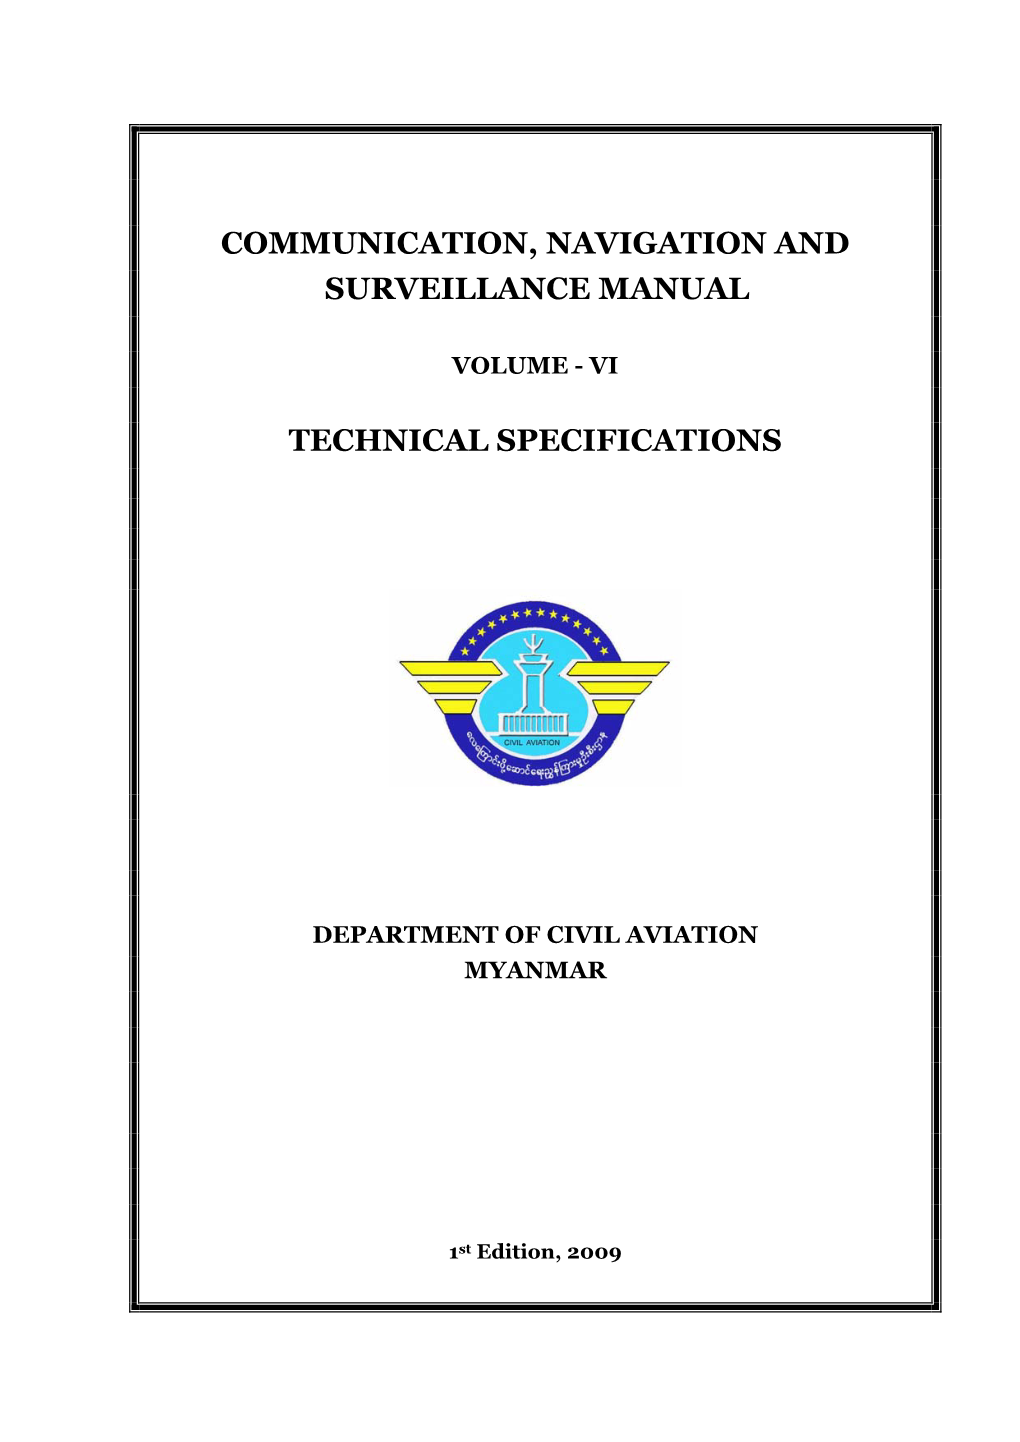 CNS Manual Volume VI